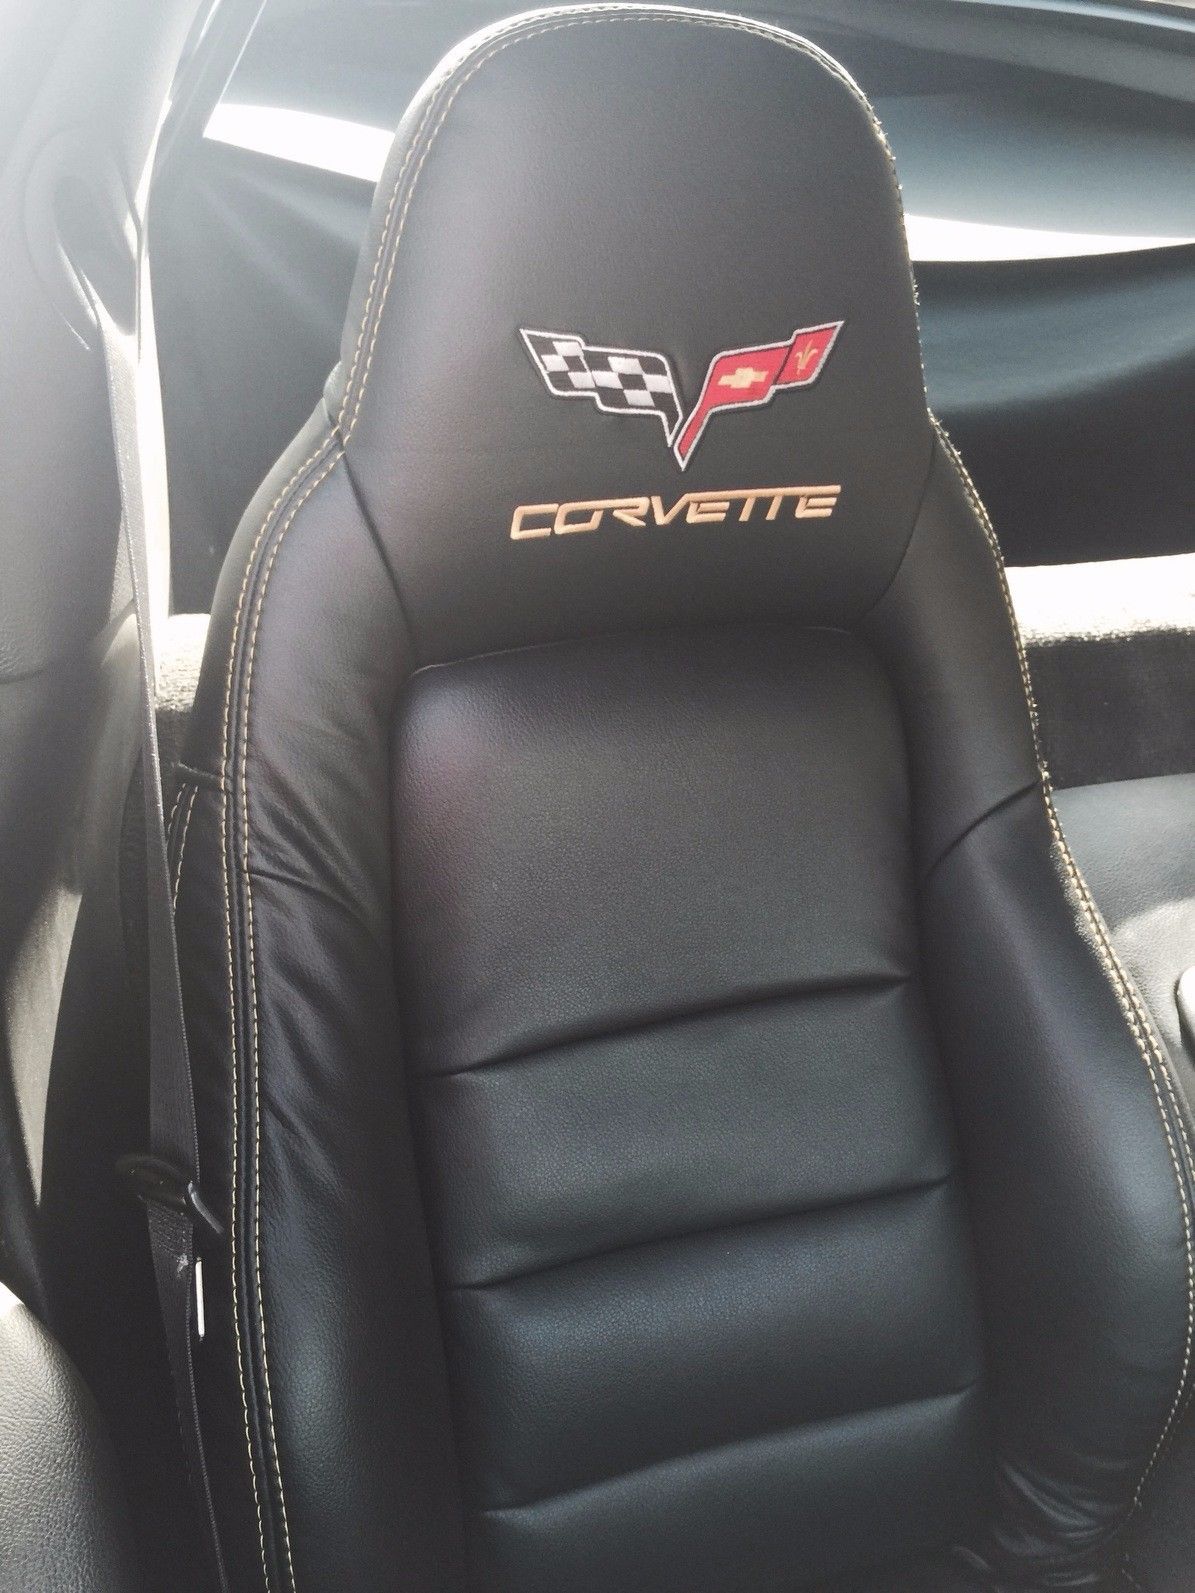 C6 Corvette Seat Covers